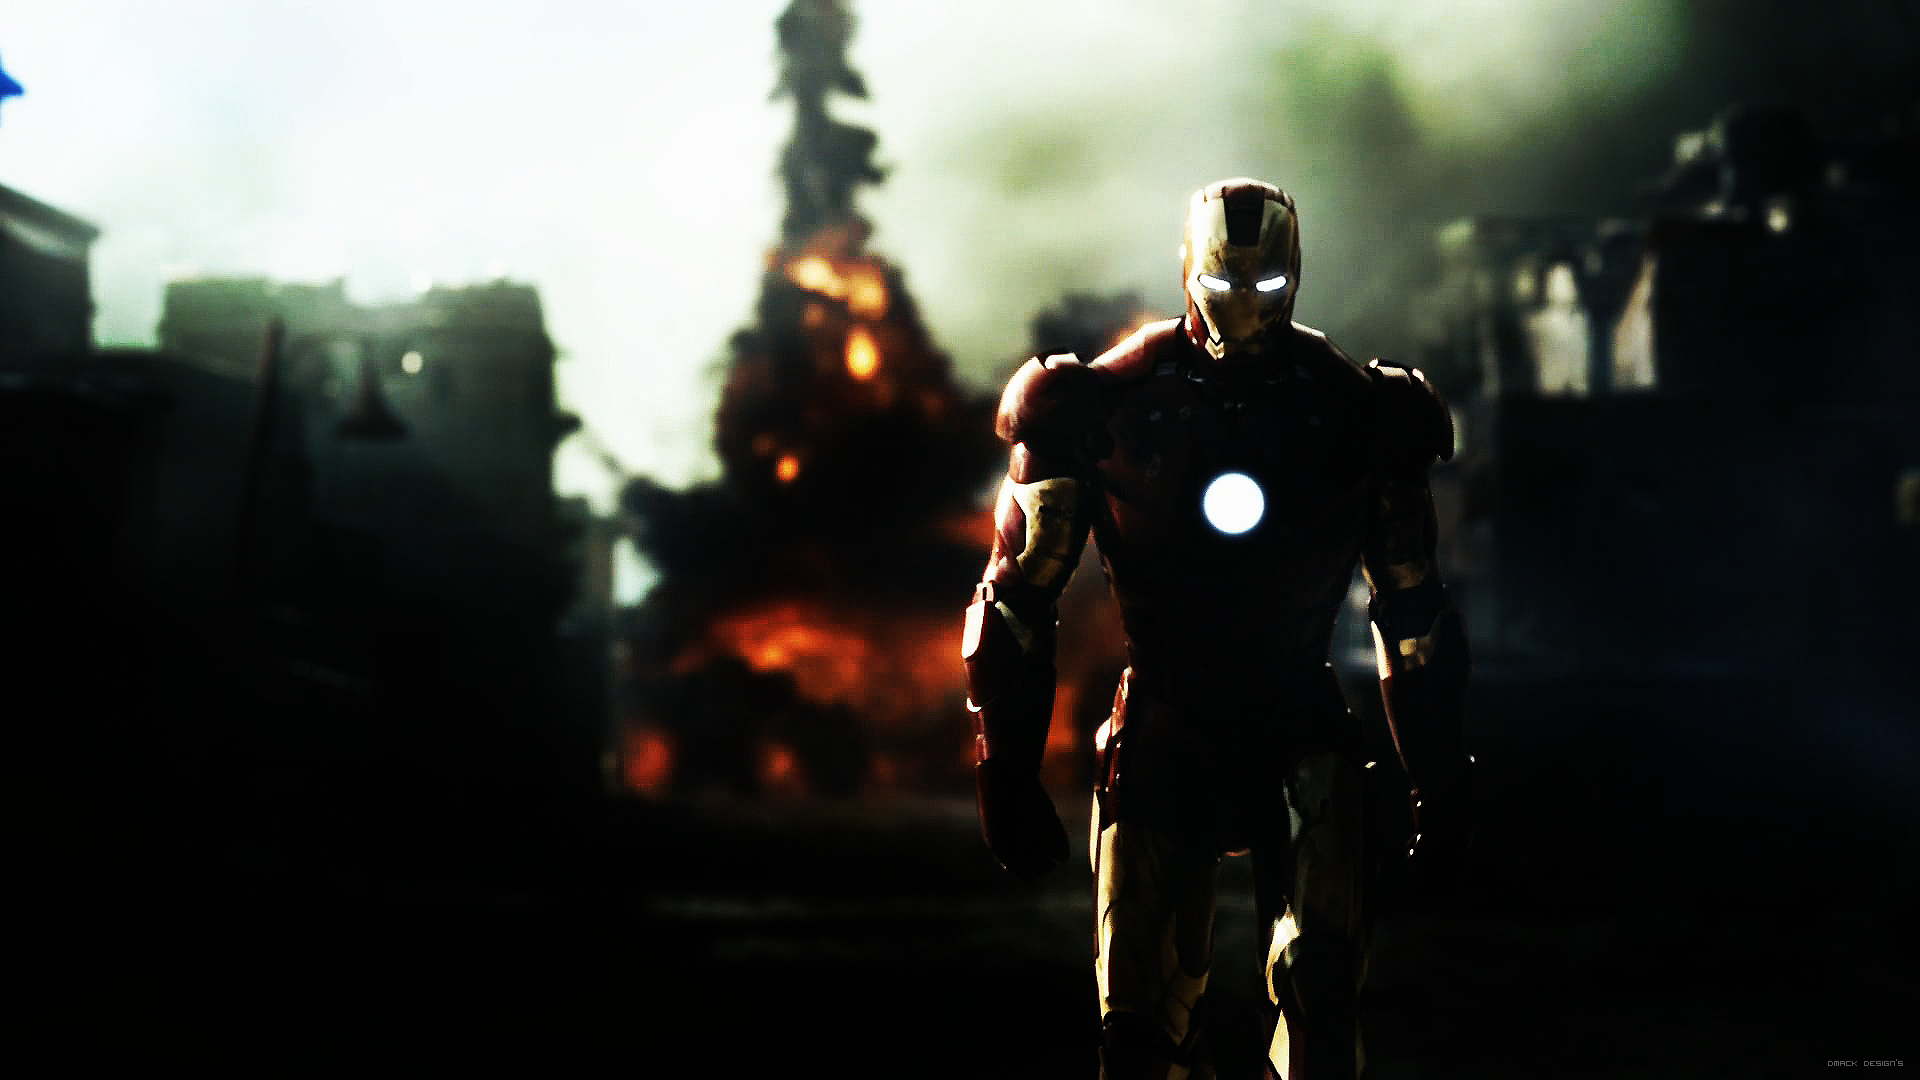 Megapost) Wallpapers HD de Iron Man [Uno te llevas] ;) - Taringa!